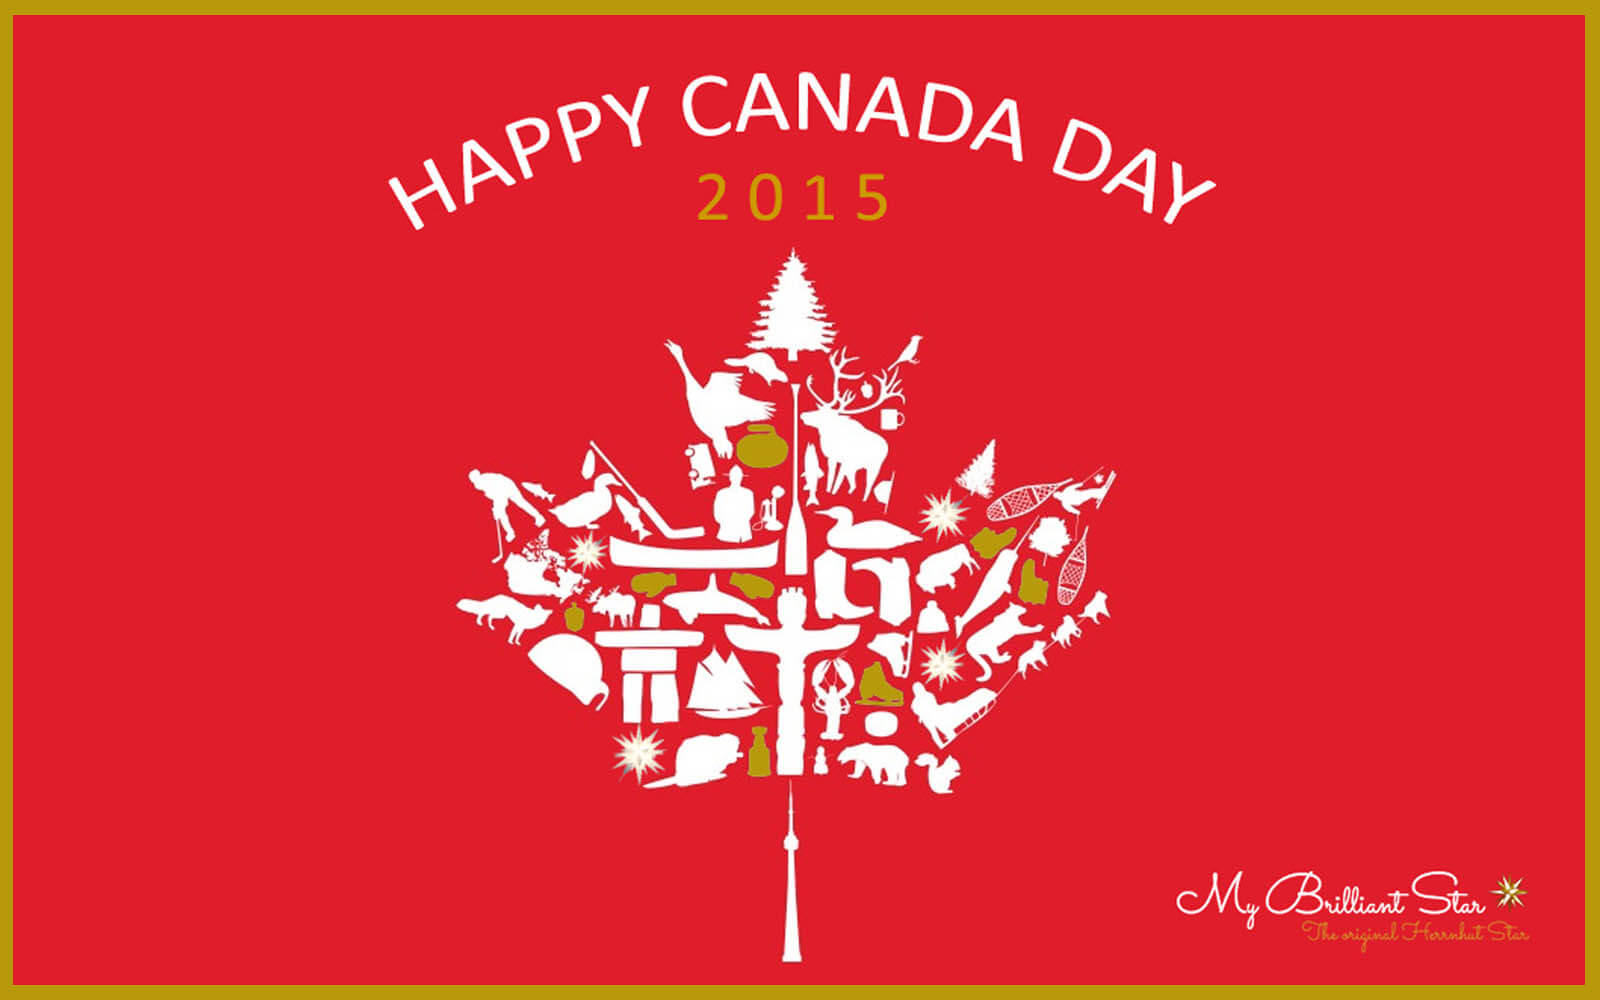 Happy Canada Day 2015